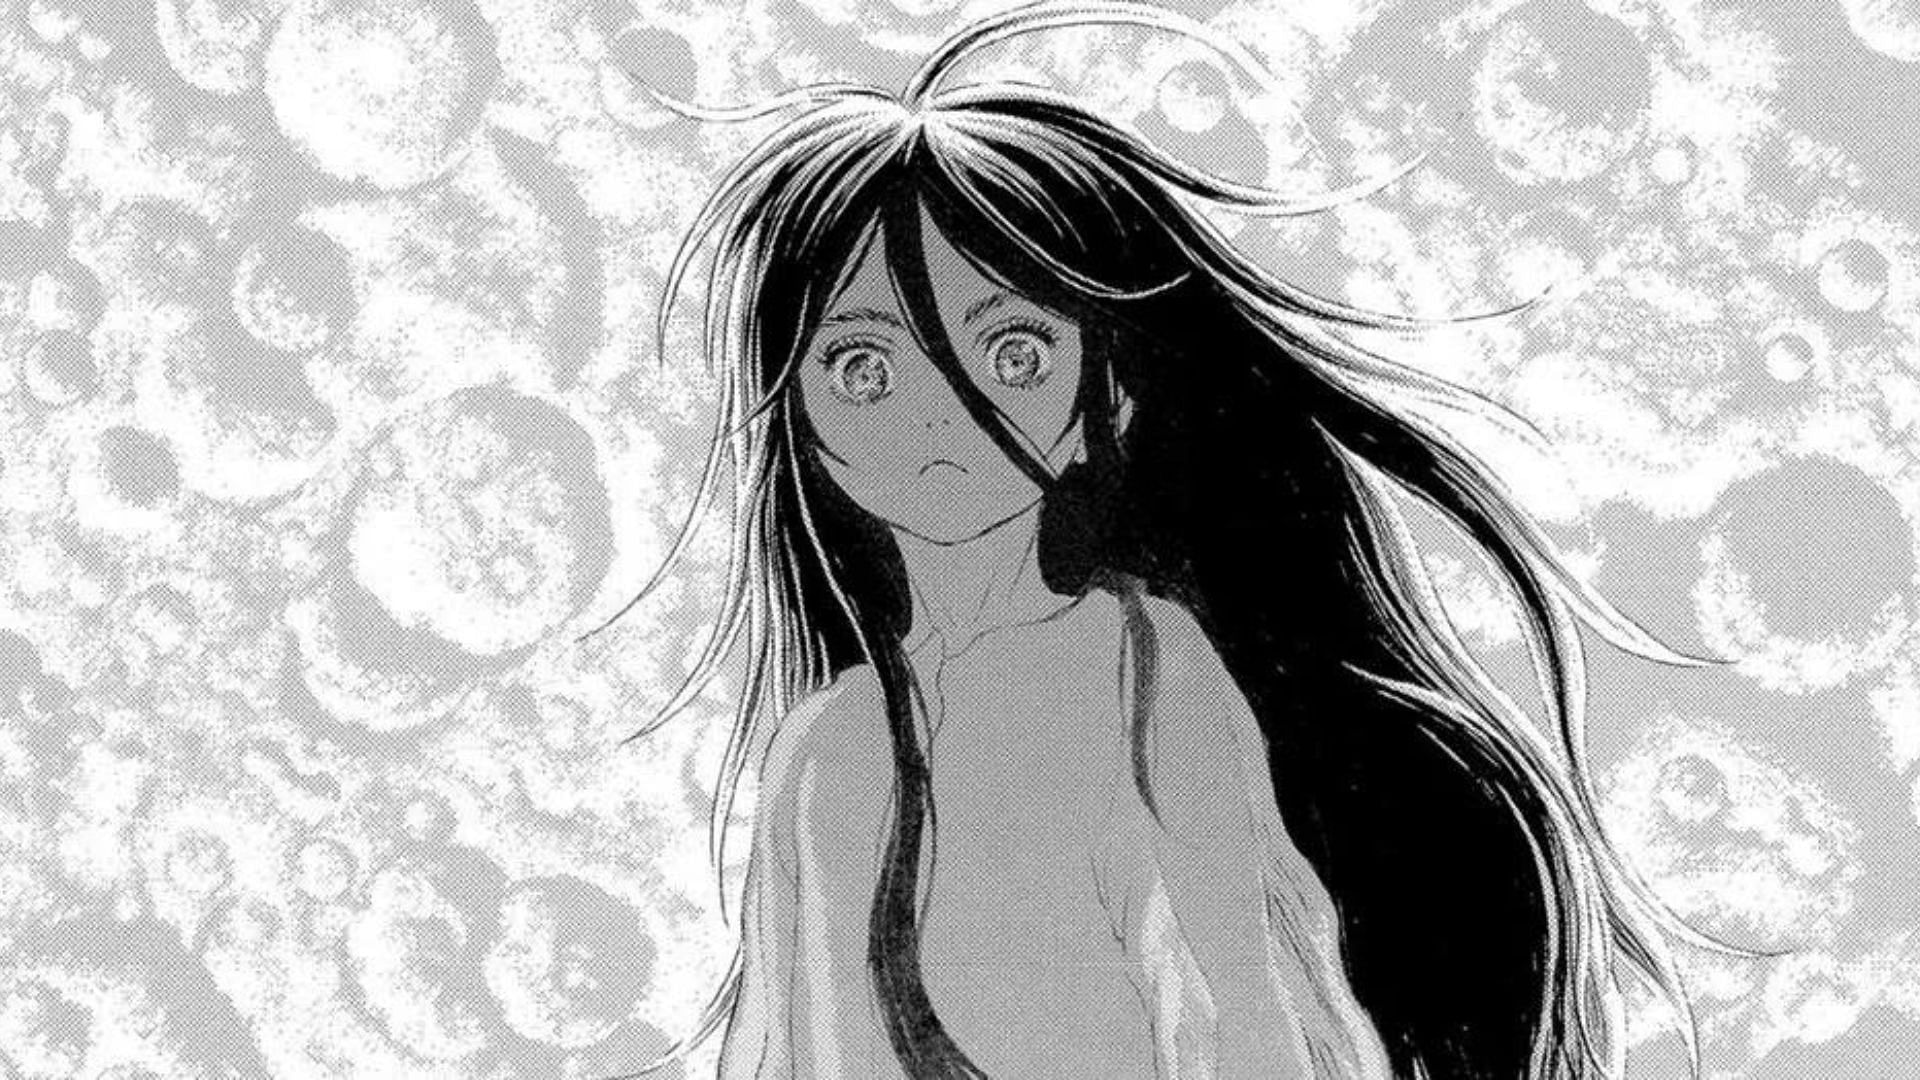 Moonlight Boy as seen in the Berserk manga (Image via Hakusensha)